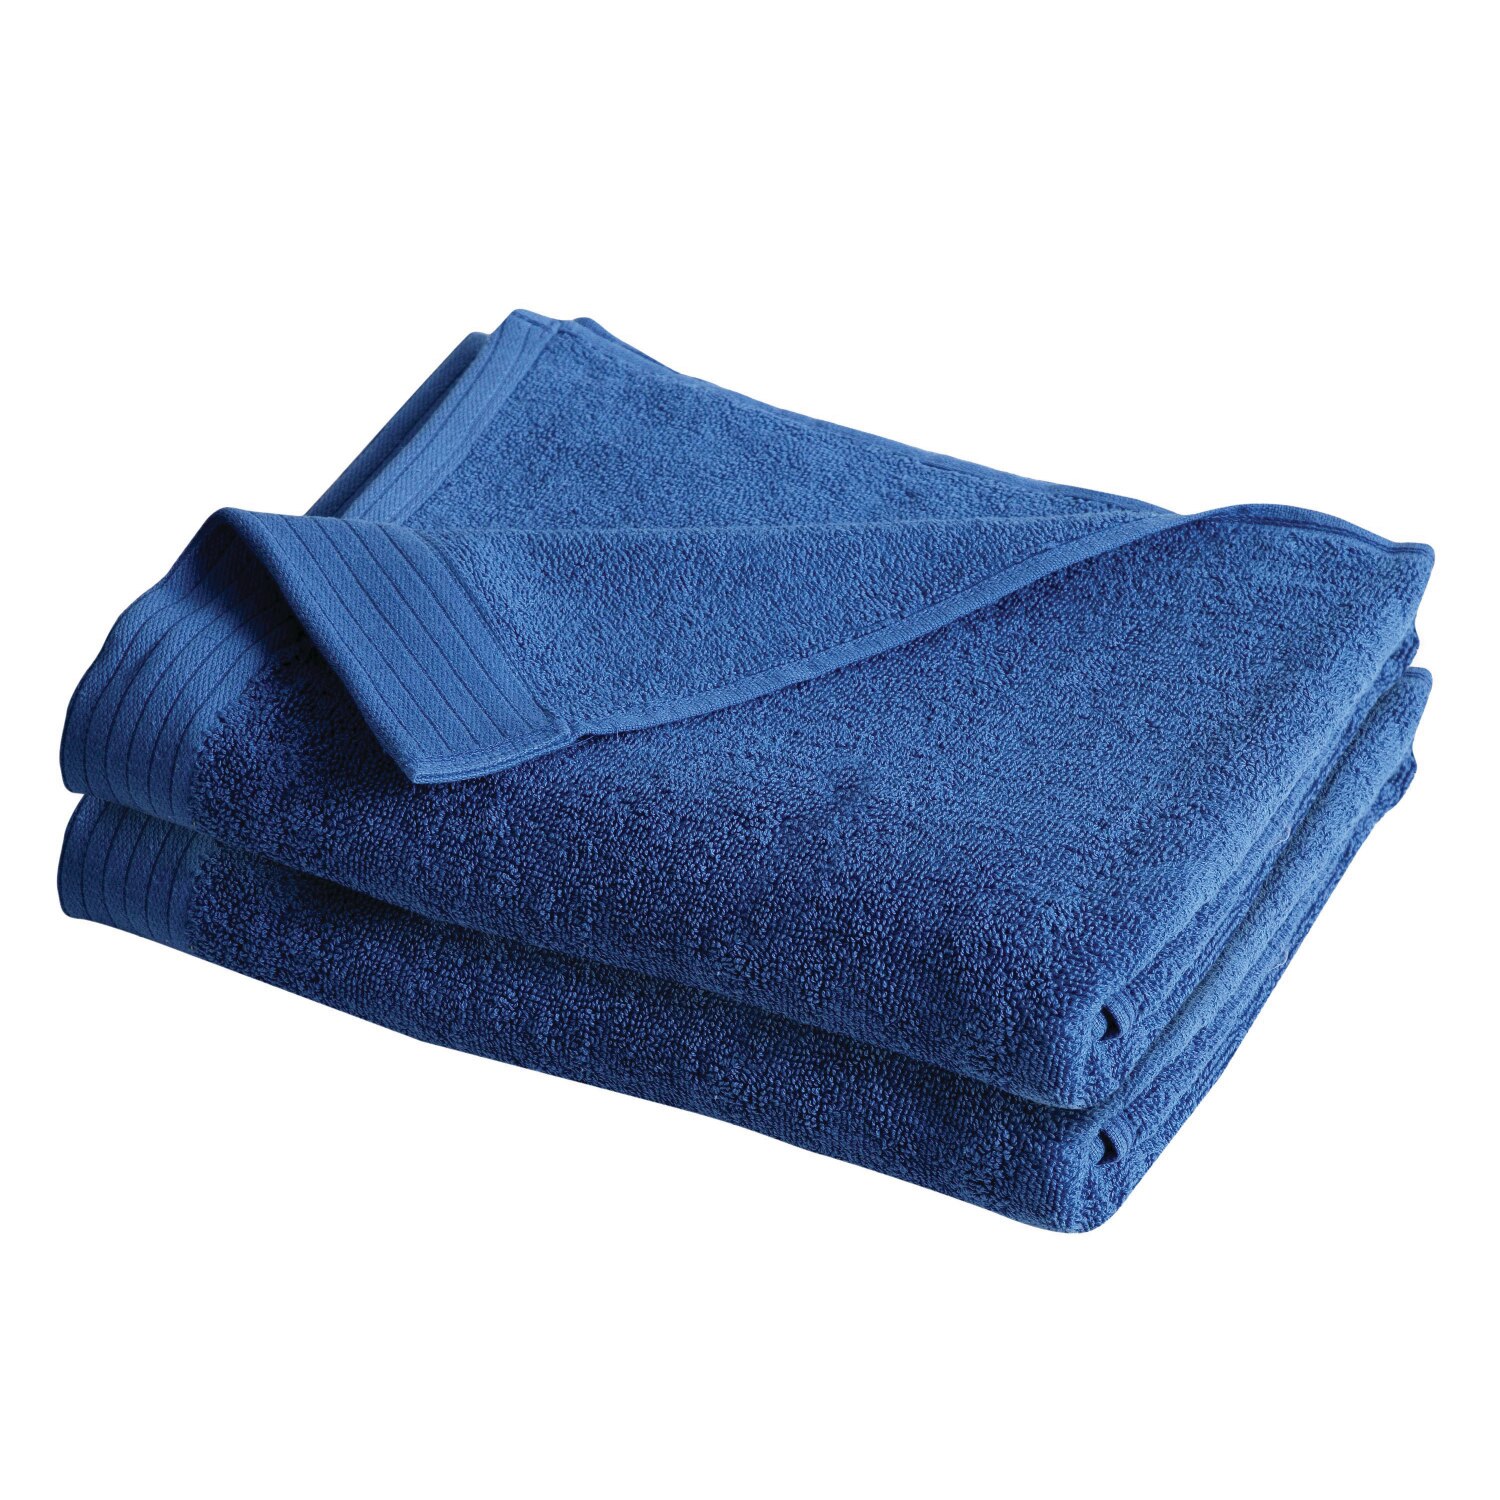 IZOD Everyday Blue 4 Pack Bath Towels